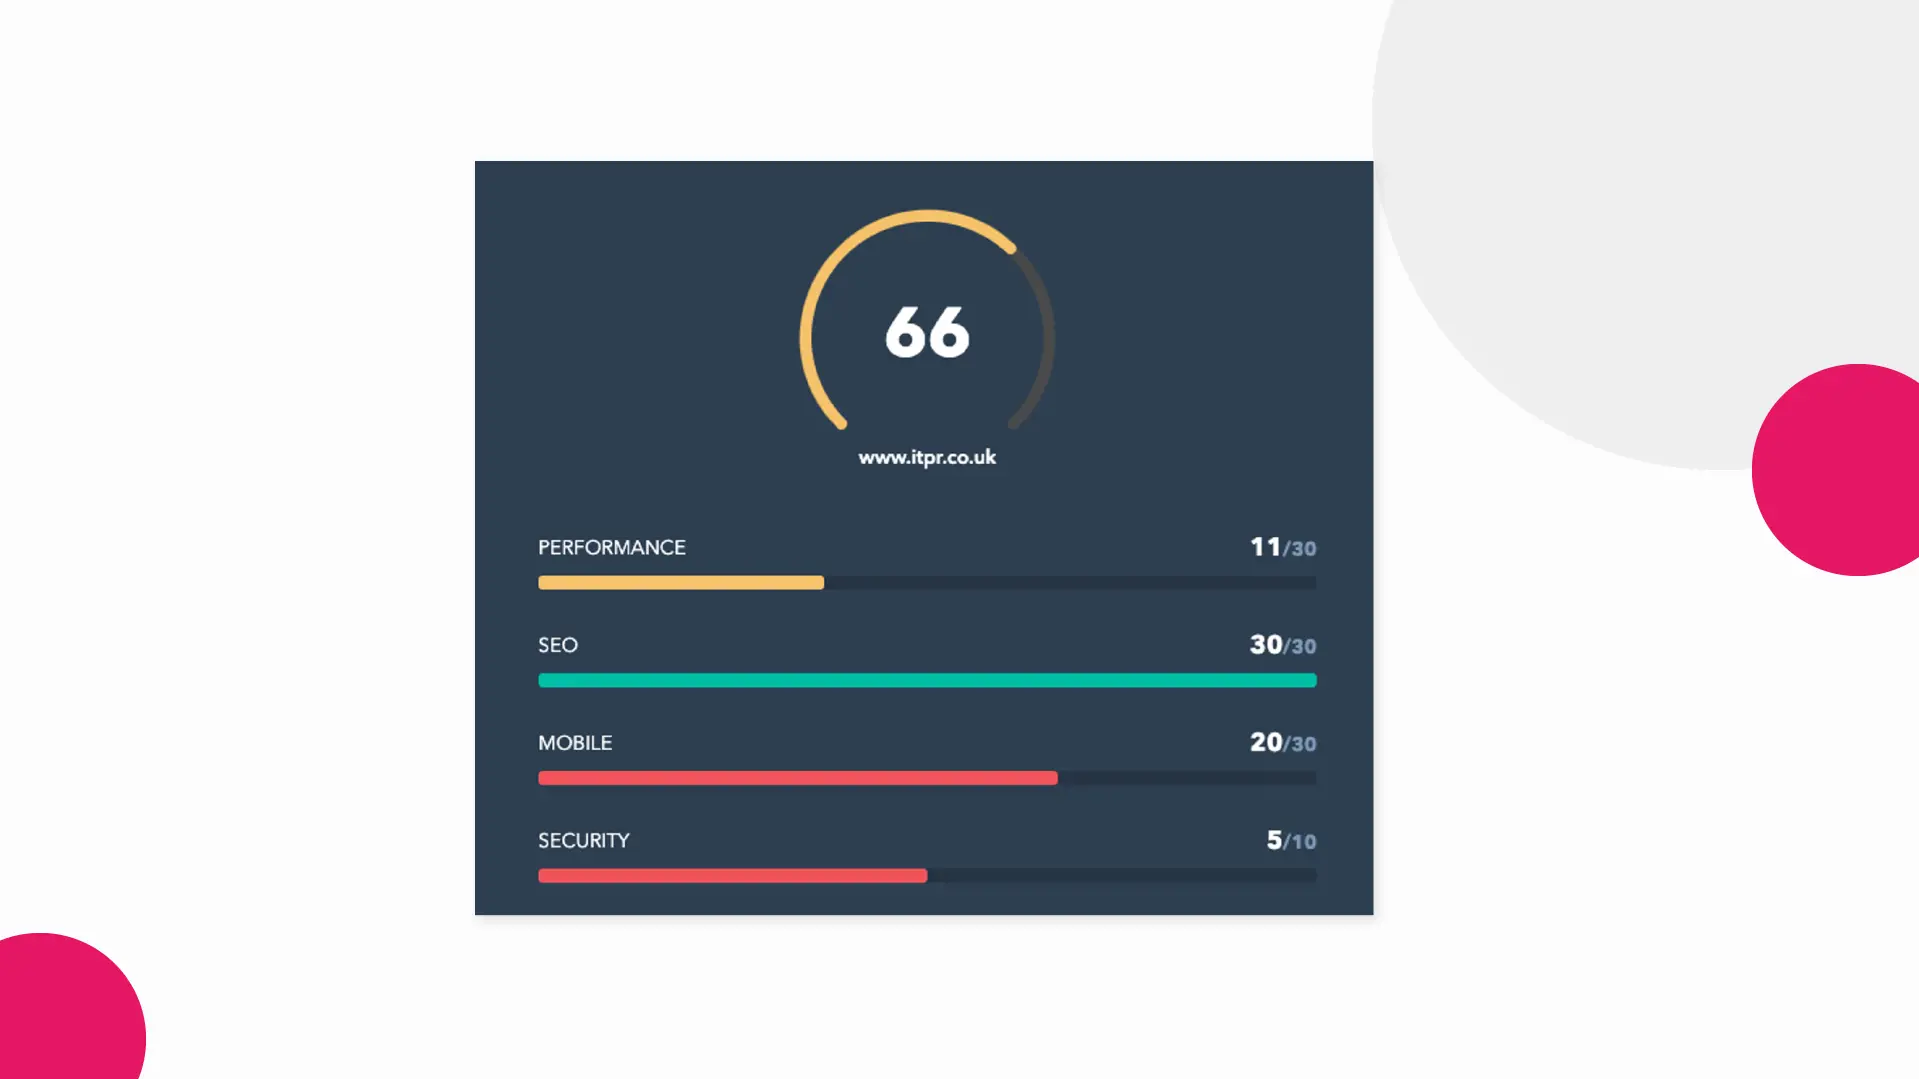 Dashboard showing website performance metrics